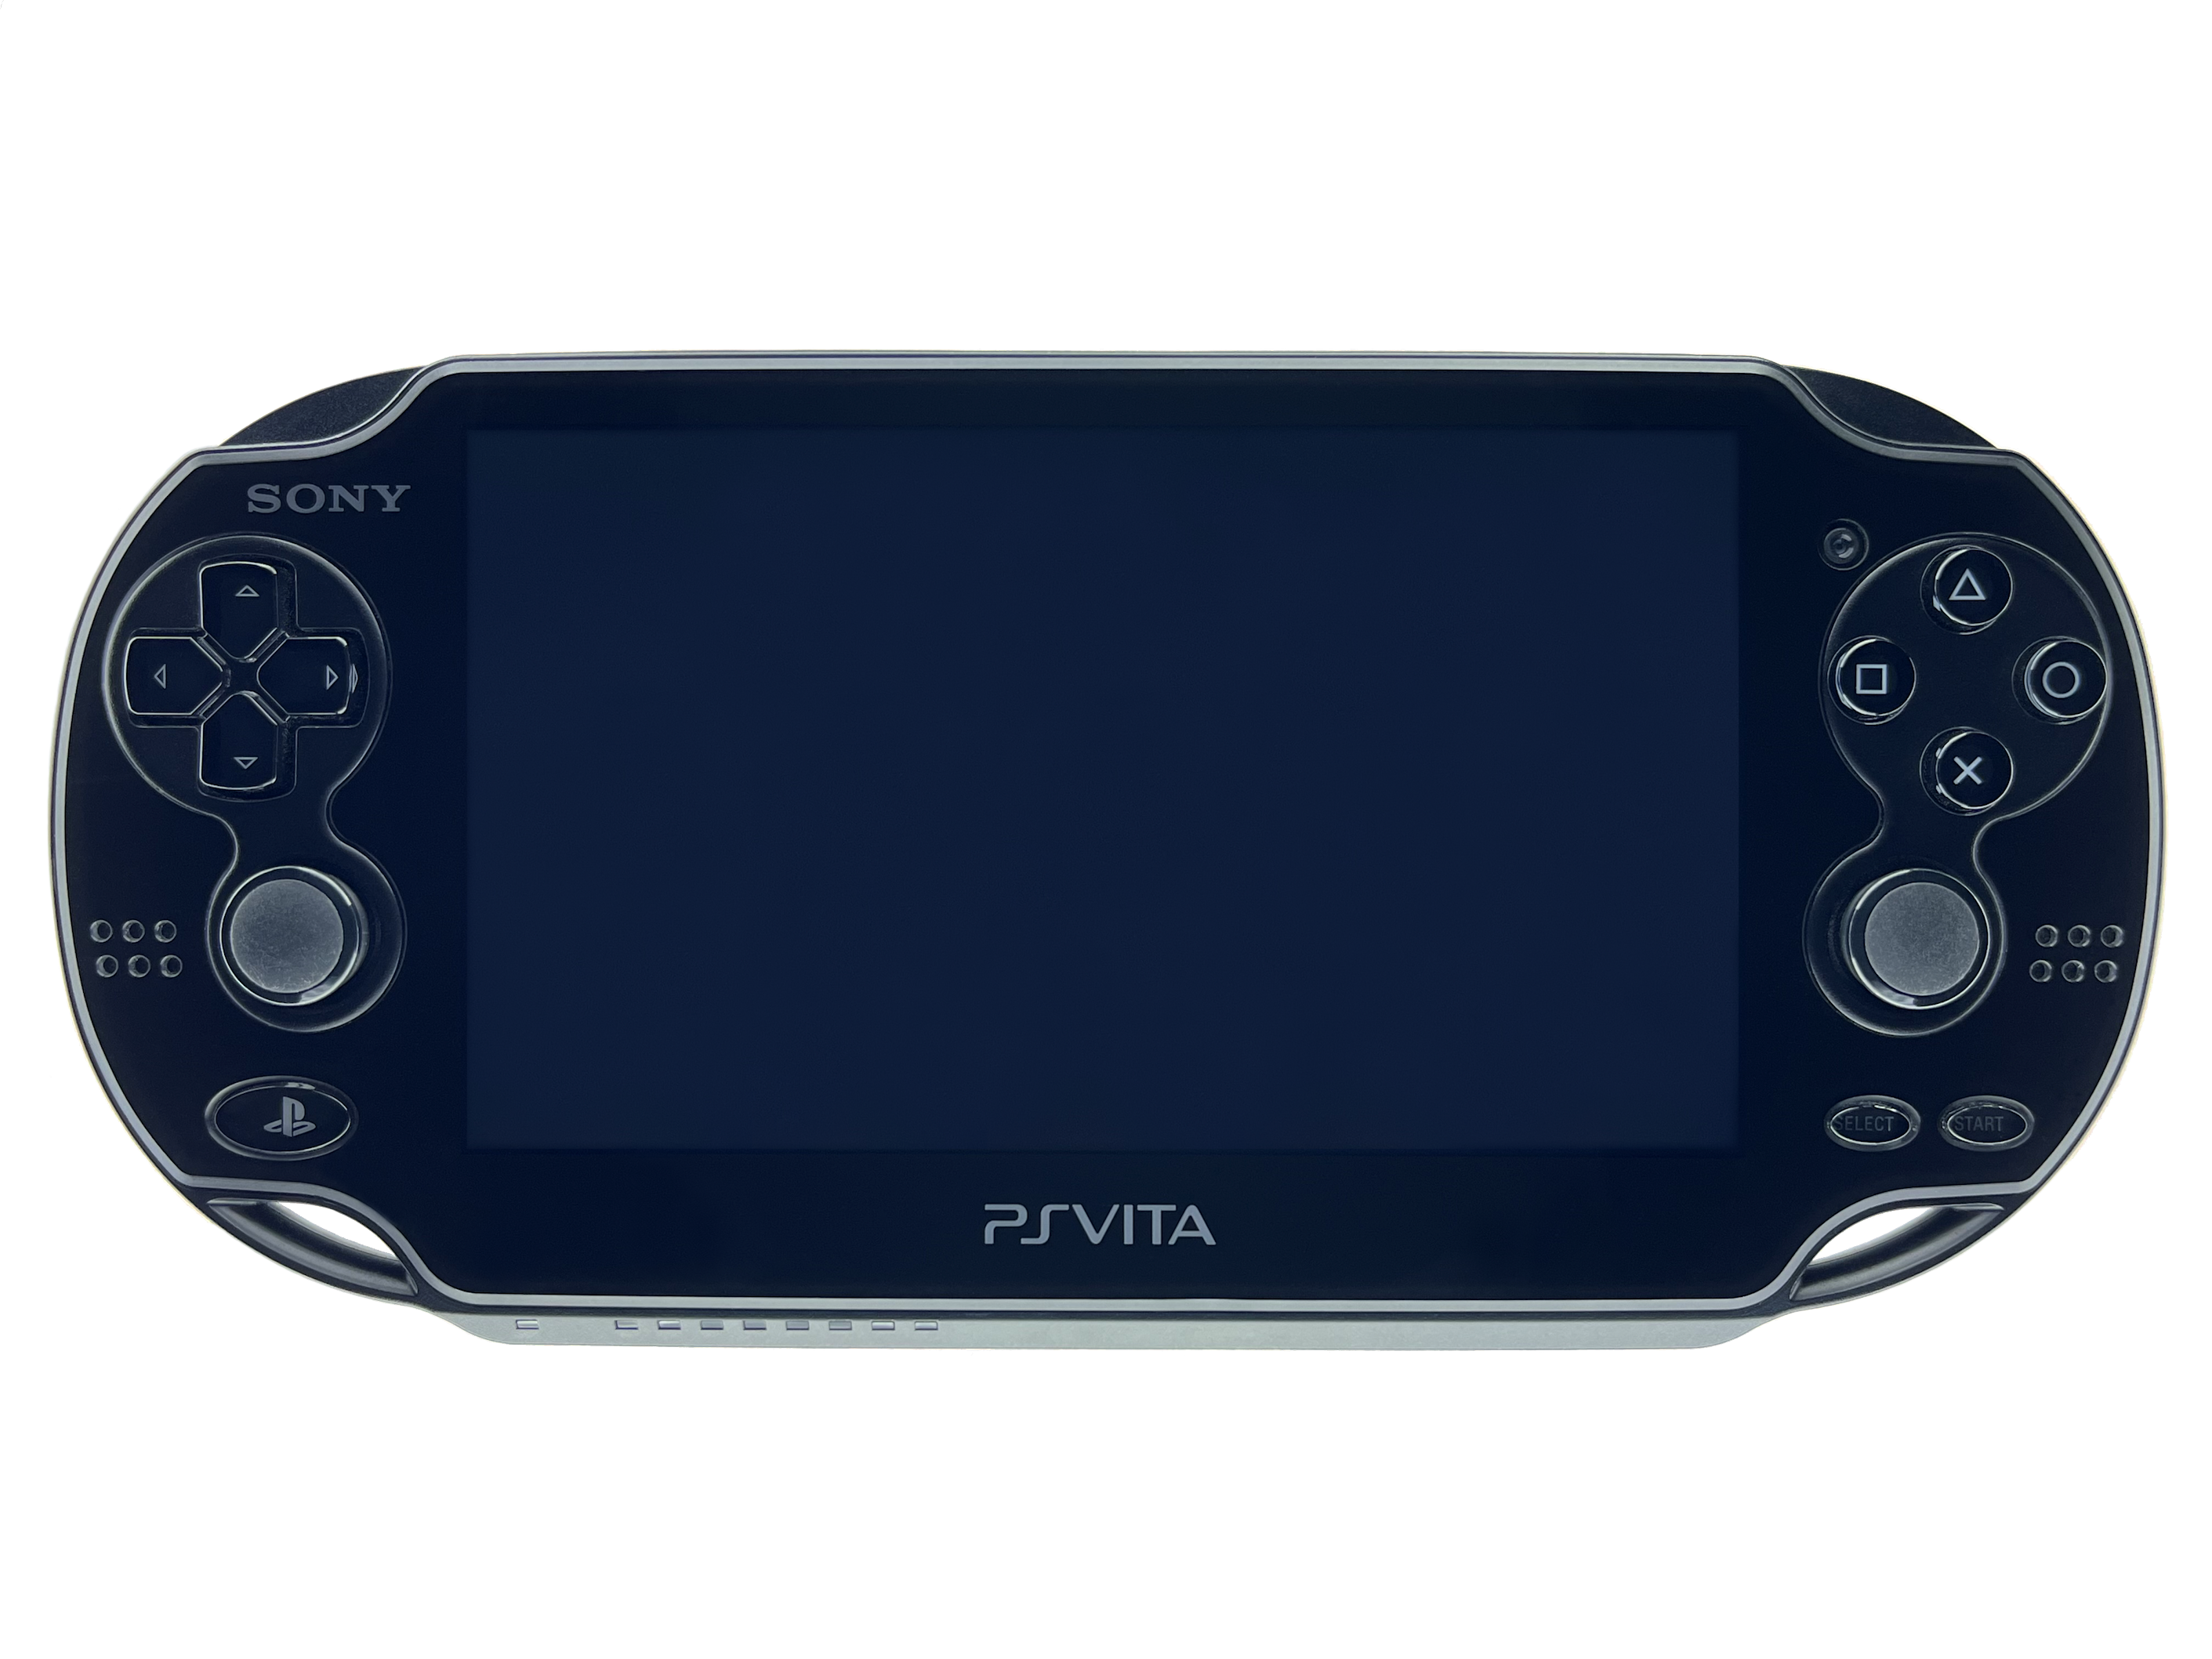  Sony PS Vita DEM-3000P Prototype Development Kit